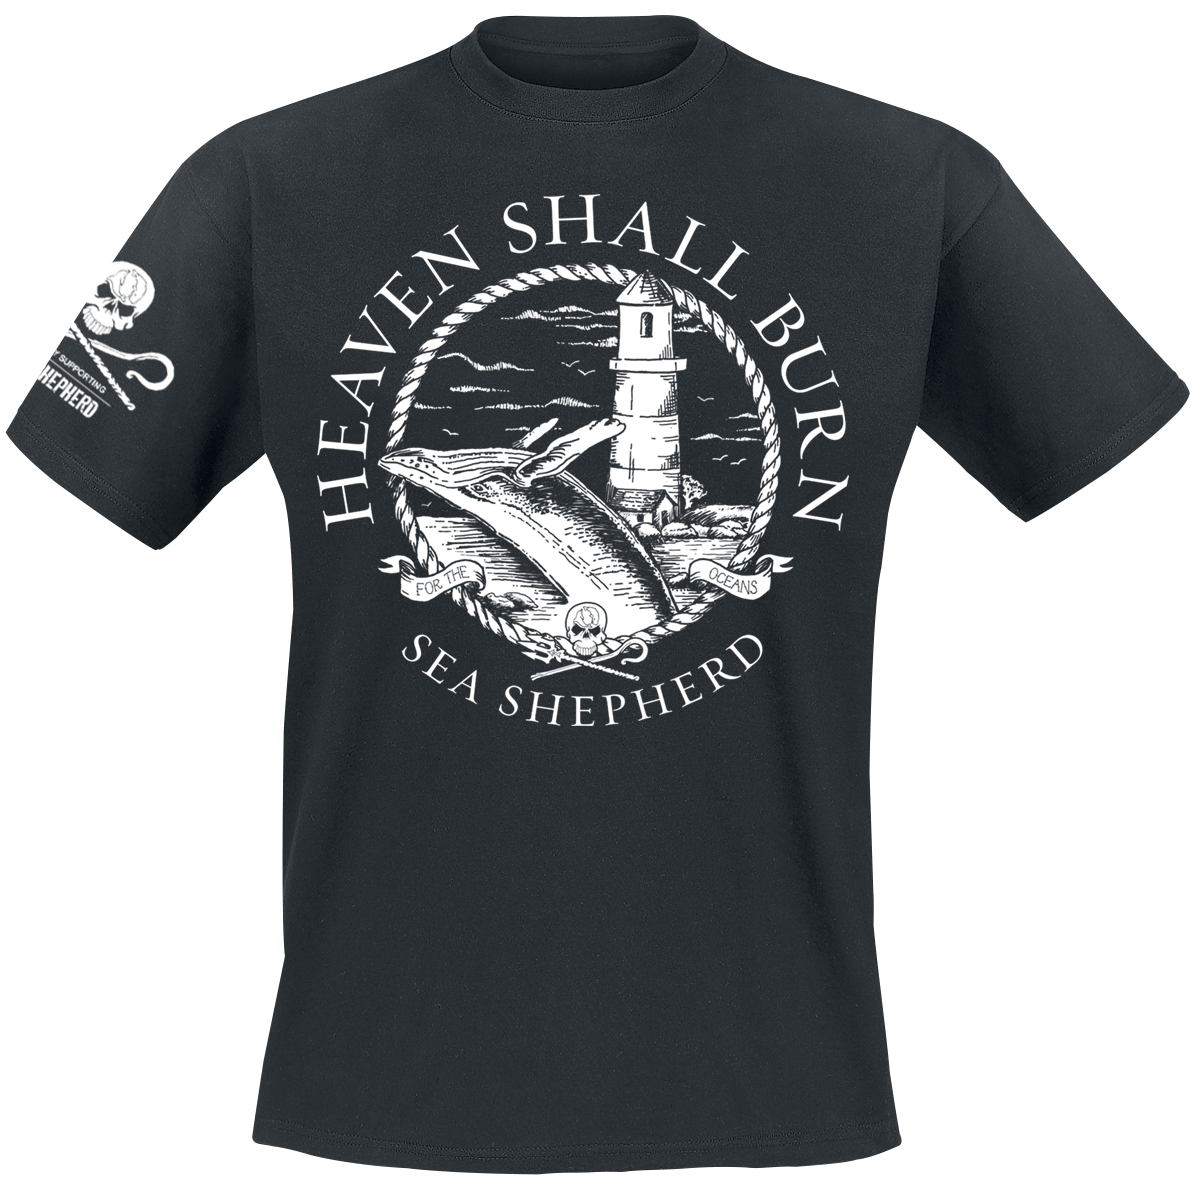 Heaven Shall Burn - Sea Shepherd Cooperation - For The Oceans - T-Shirt - schwarz - EMP Exklusiv!